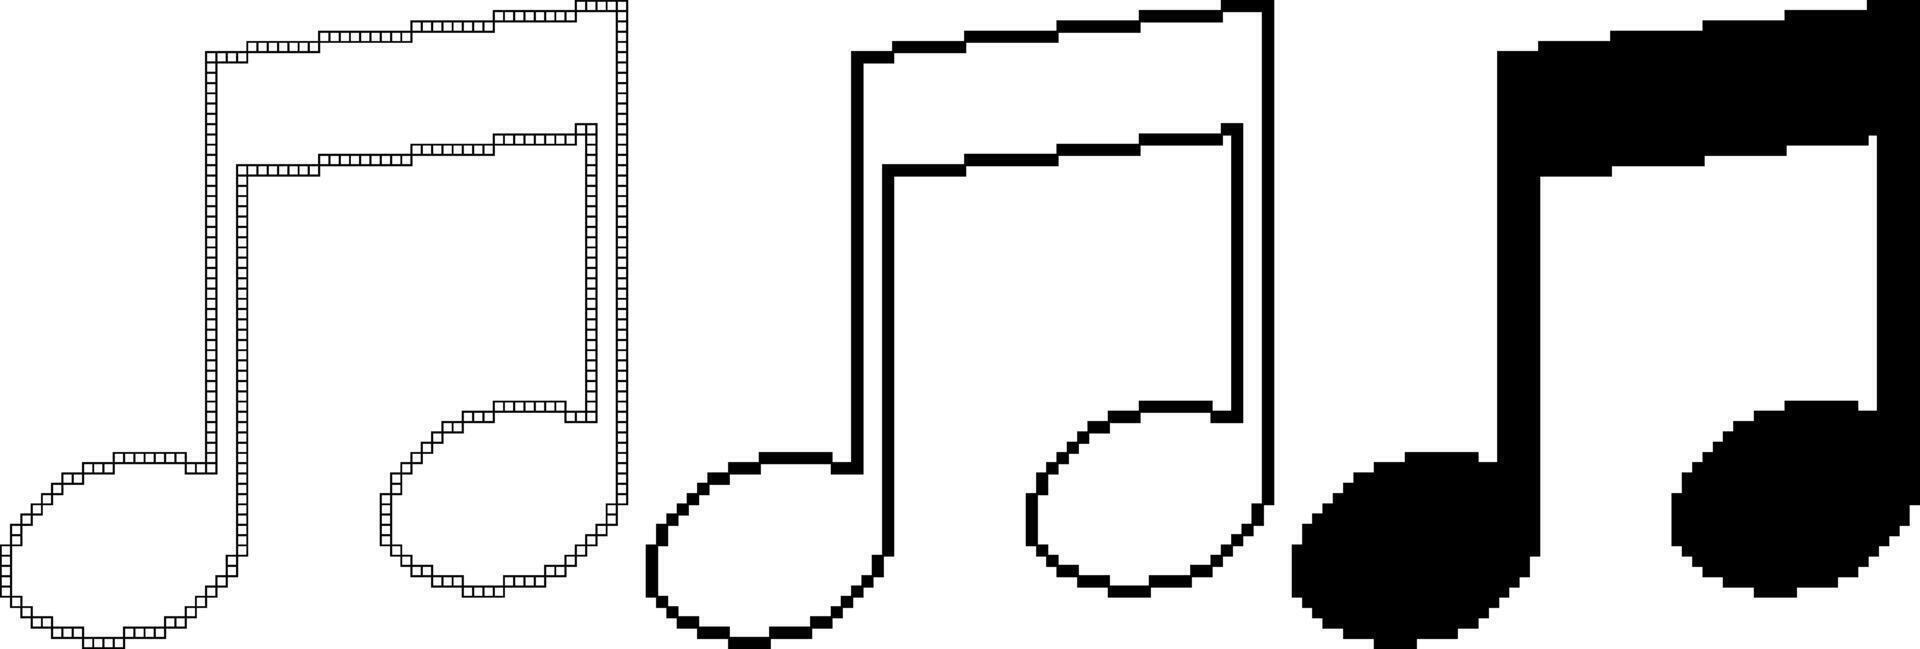 black white pixel art note music icon set vector